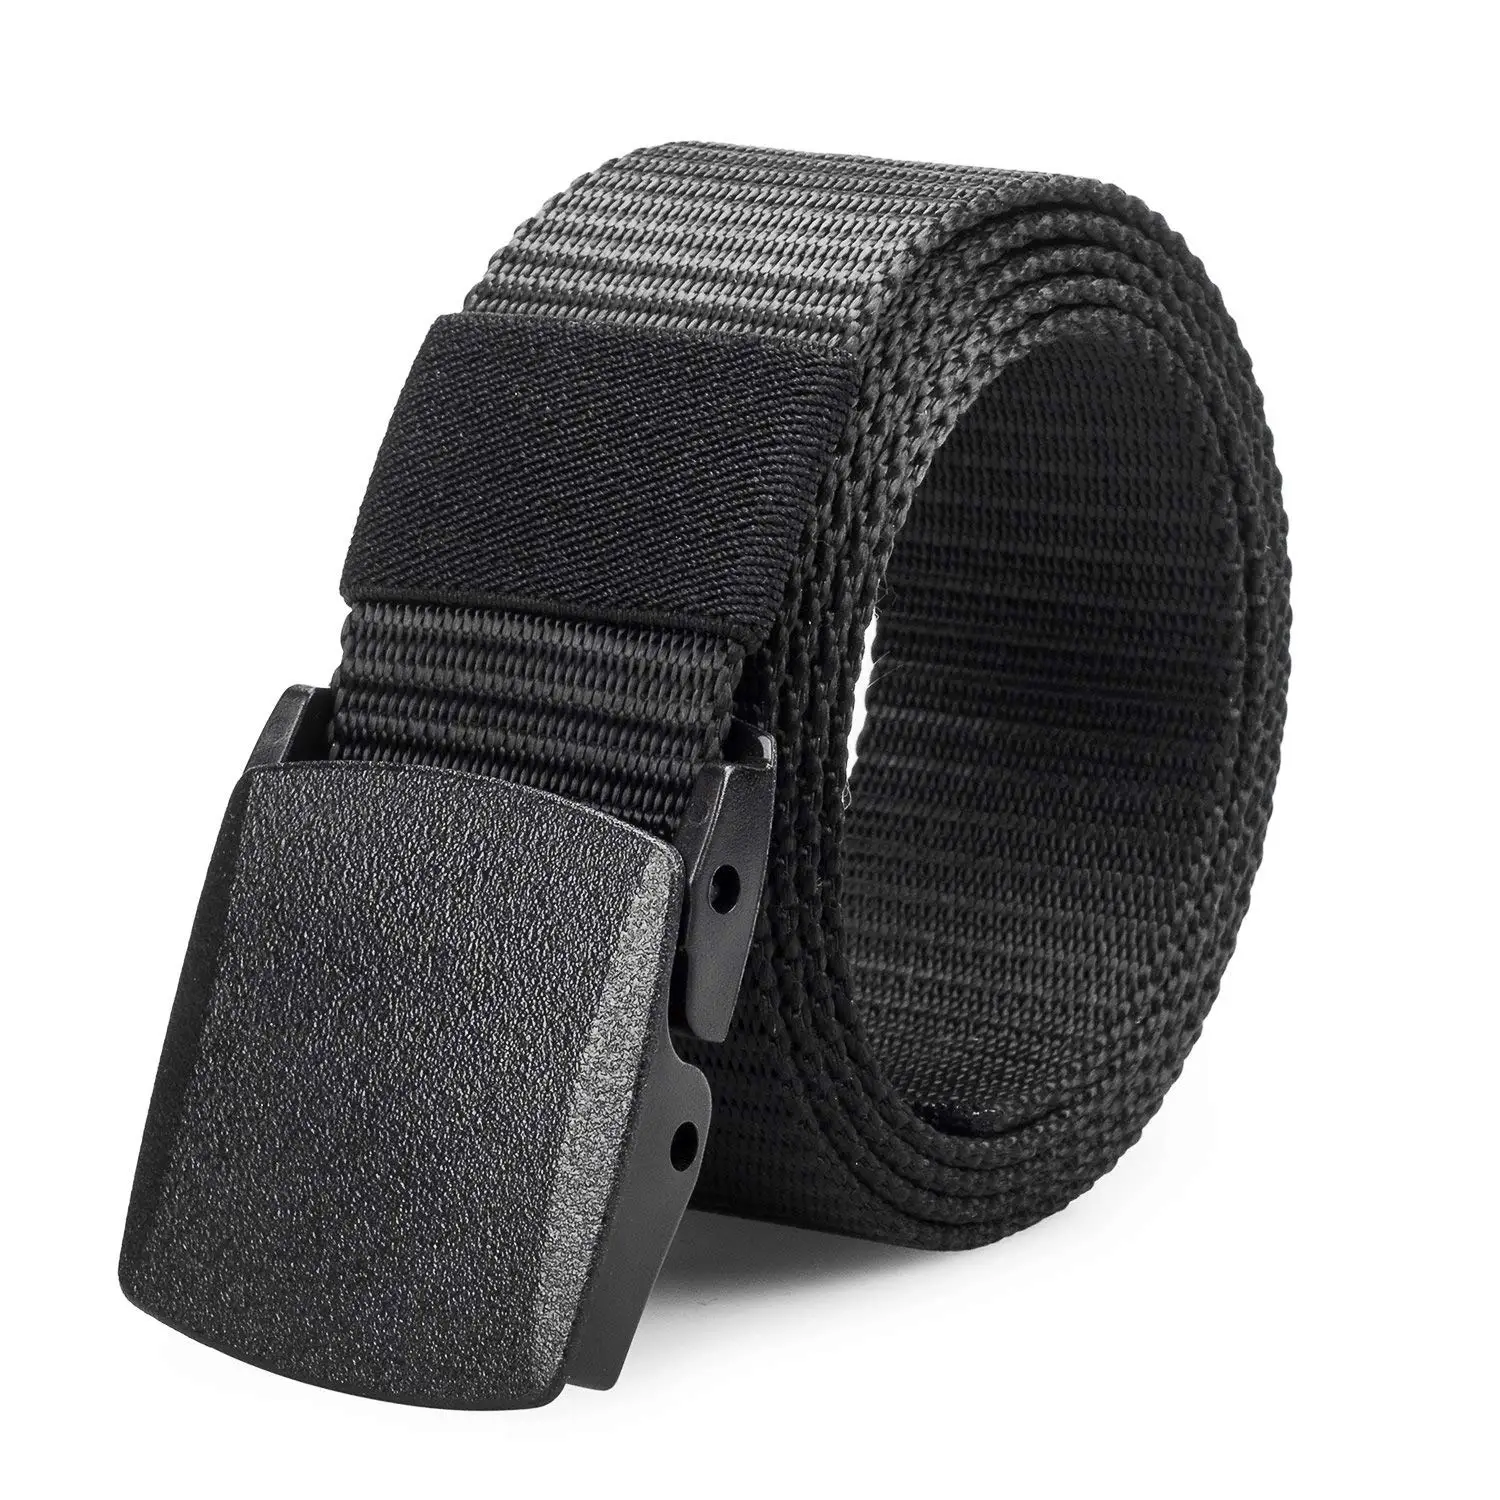 Buy Tactical Belt, Nylon Webbing Belt with Plastic Buckle Riggers Belt ...